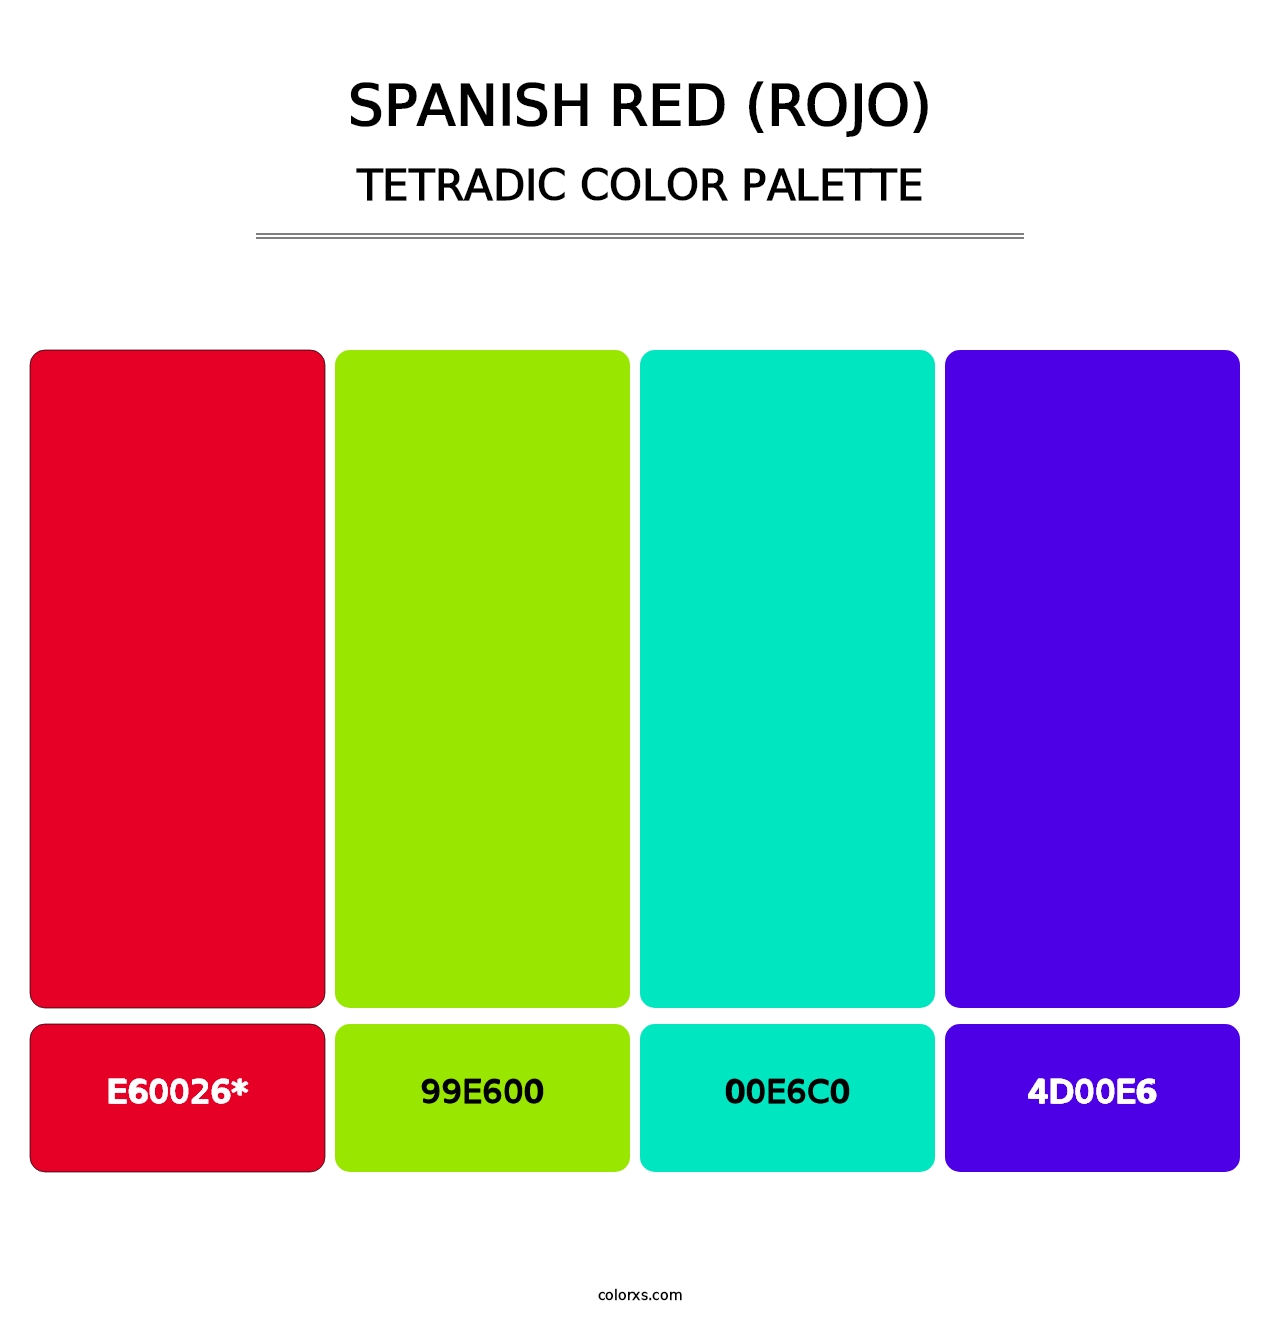 Spanish Red (Rojo) - Tetradic Color Palette